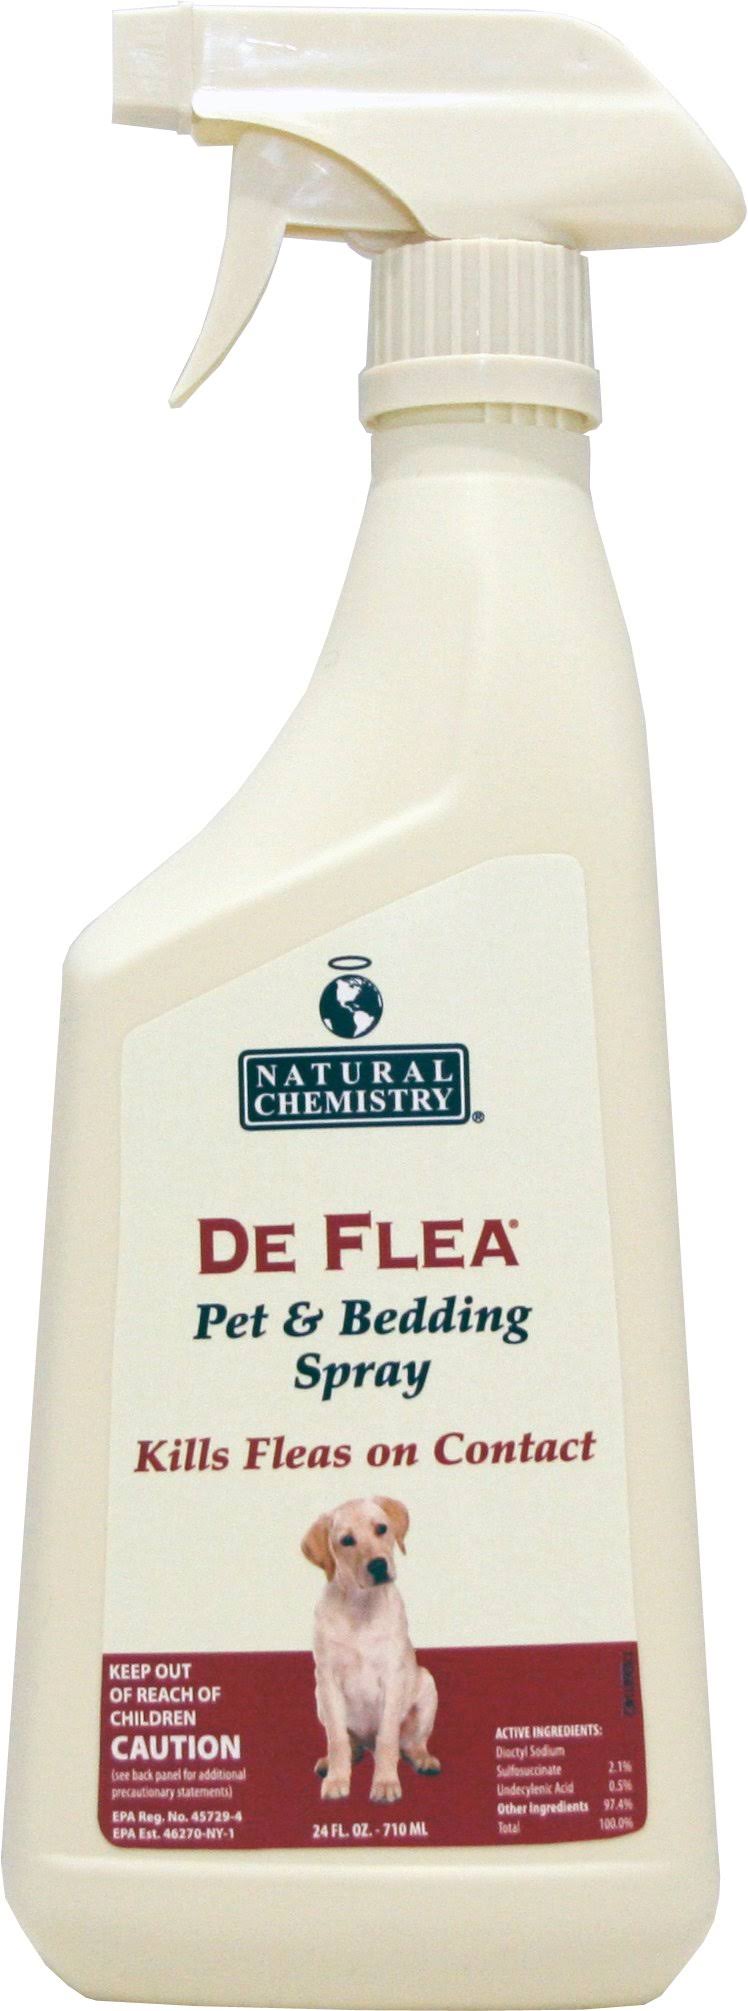 De Flea Pet and Bedding Spray for Dogs - 24oz